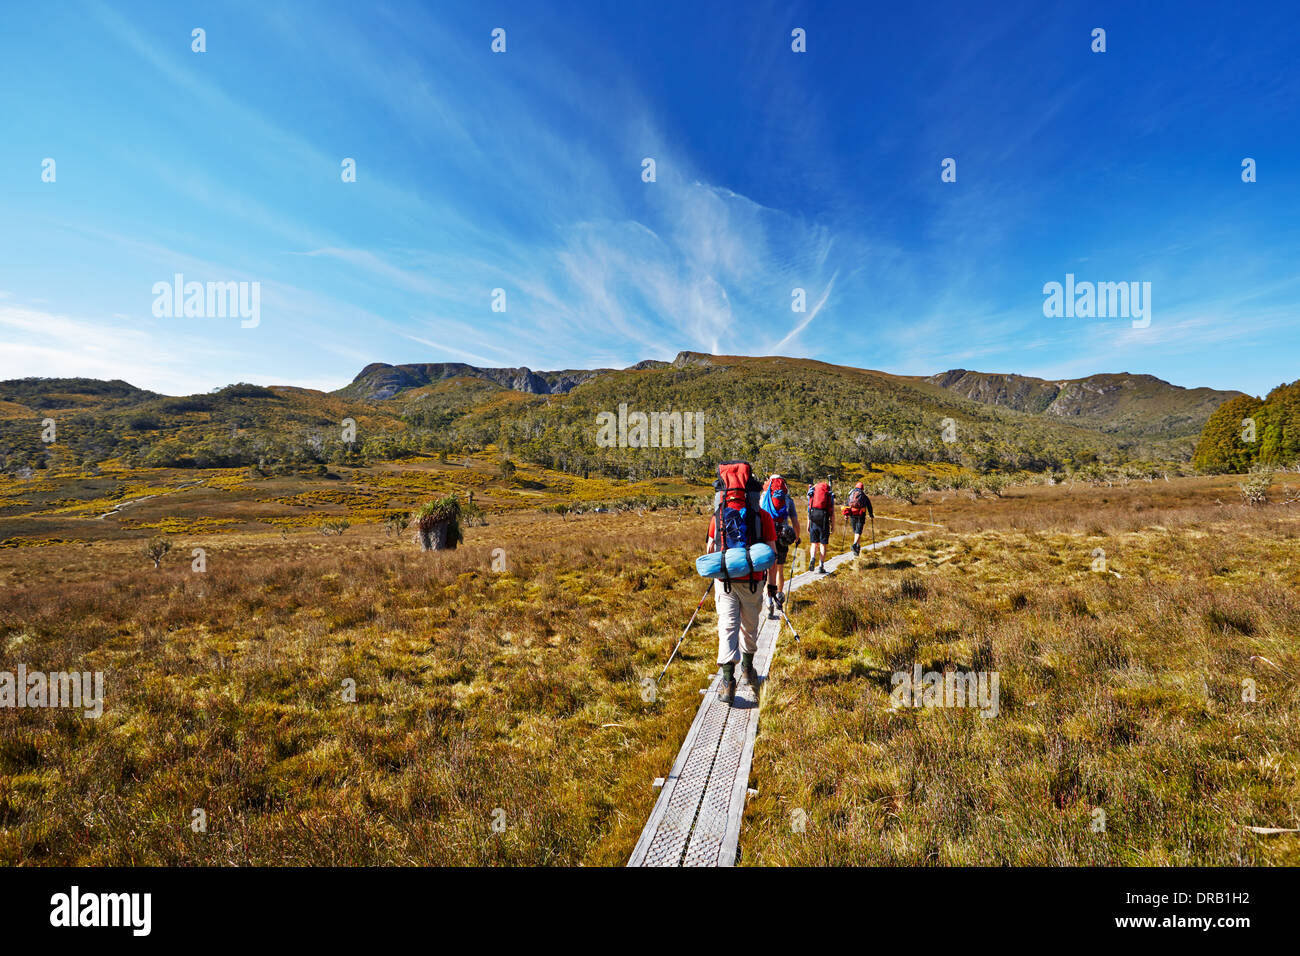 Hikers on Overland Trail in Tasmania, Australia Stock Photo